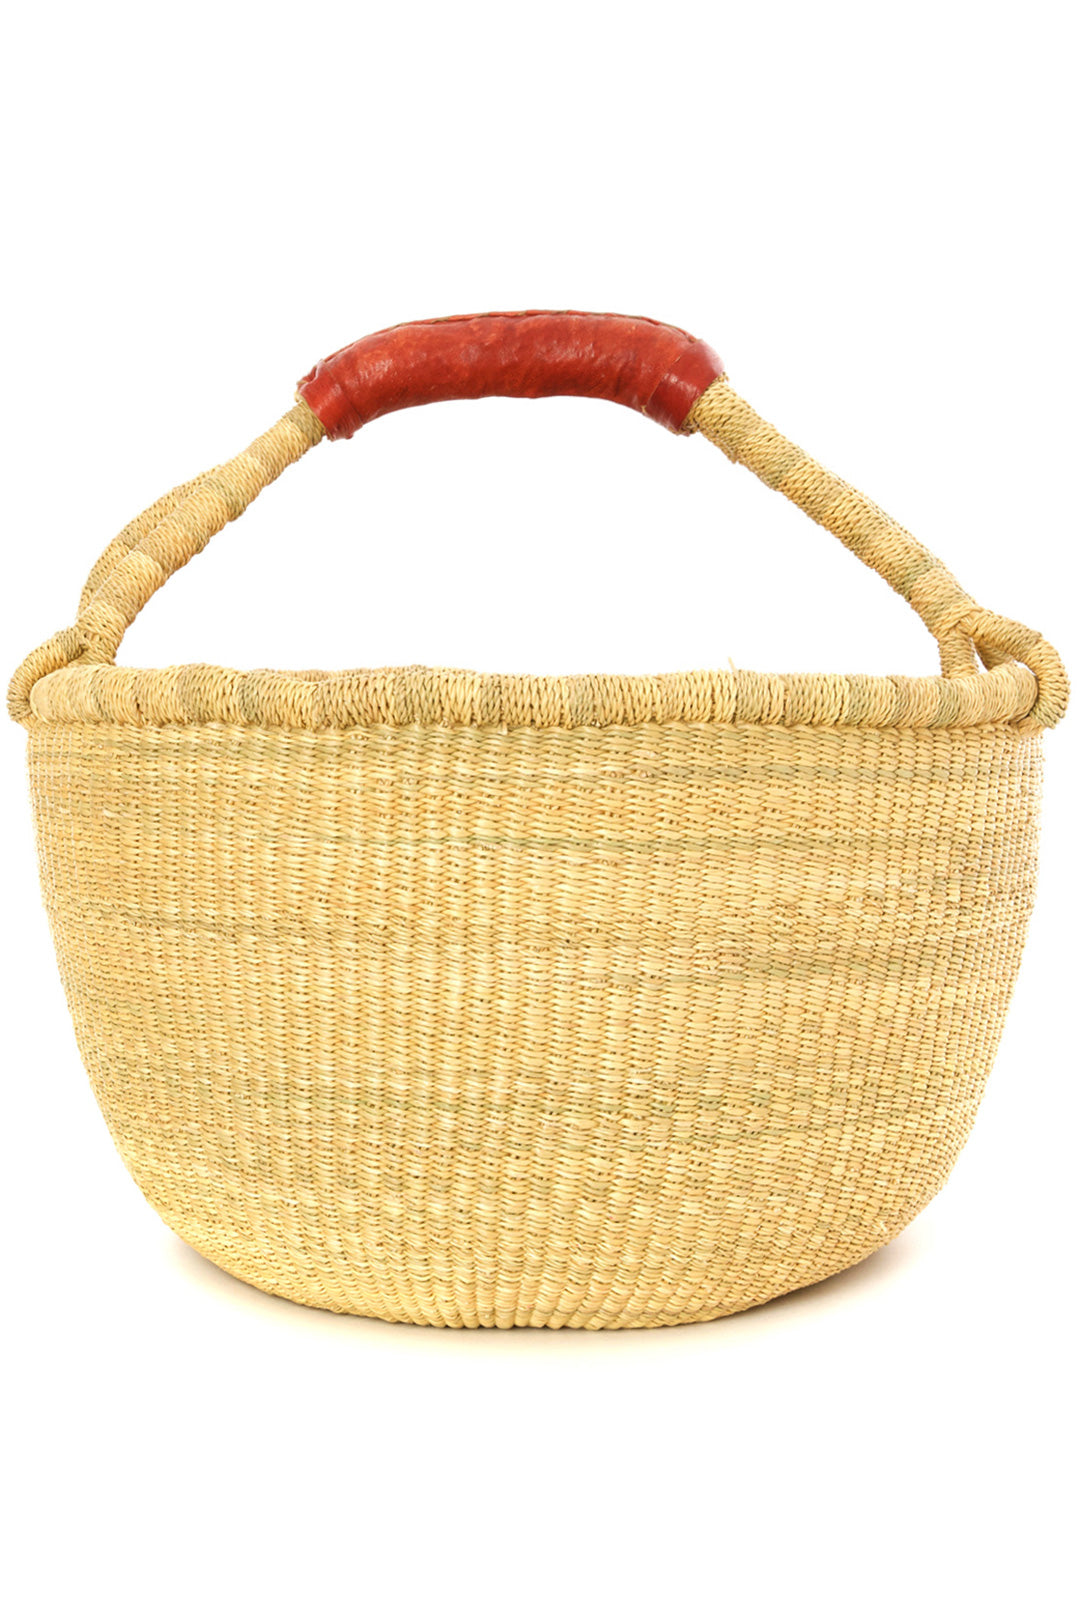 Basic Bolga Farmer's Market Shopper Basket with Brown Leather Handles